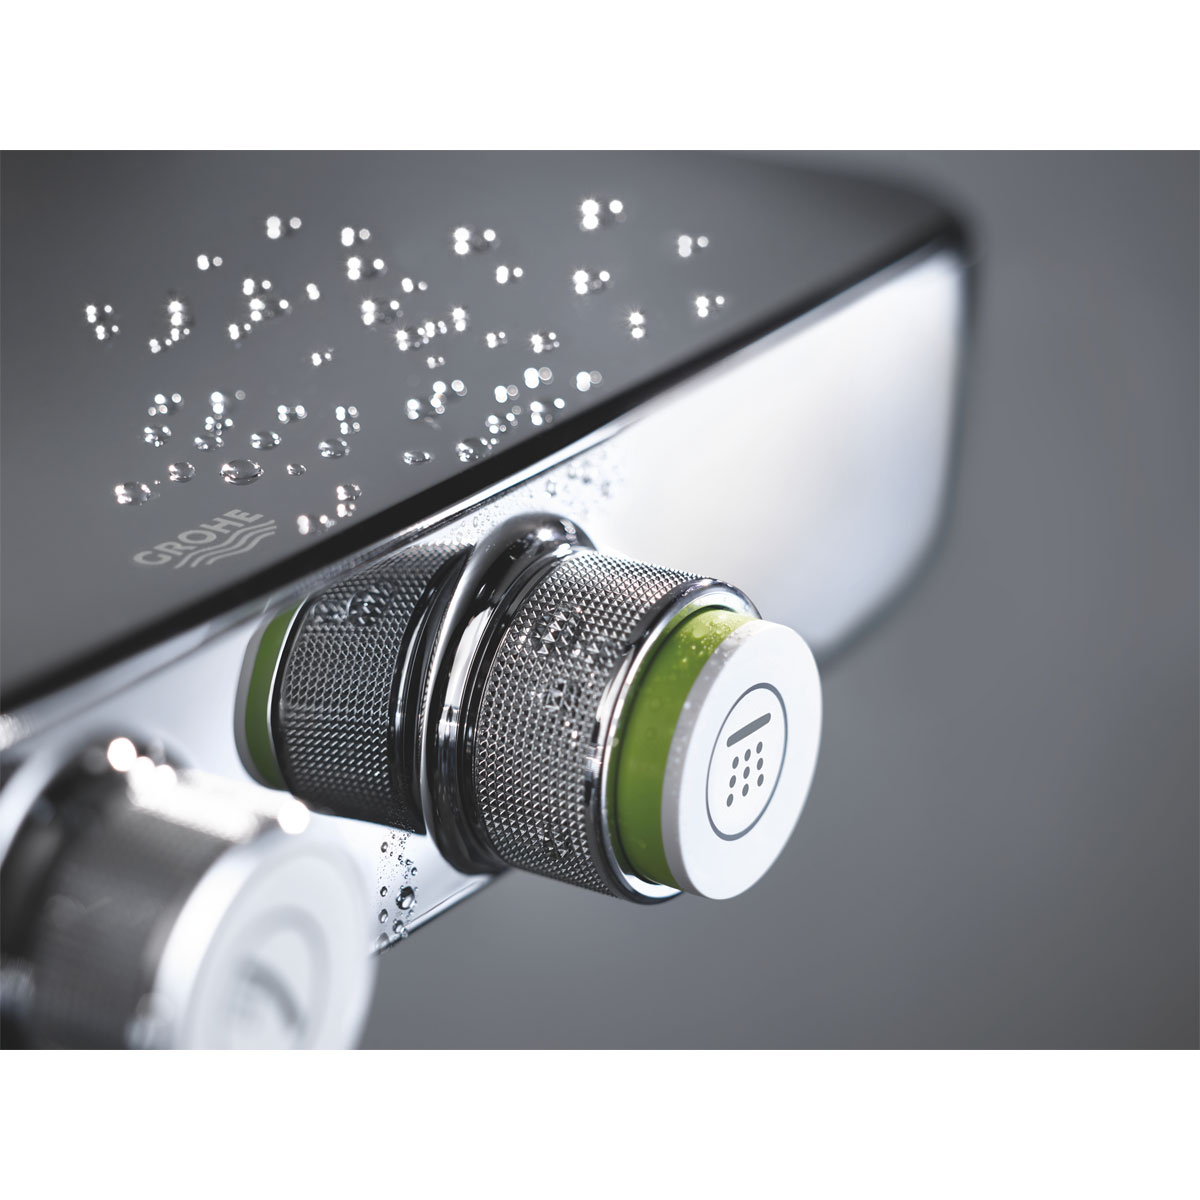 Duschsystem „Euphoria SmartControl 260“, mit Thermostatbatterie